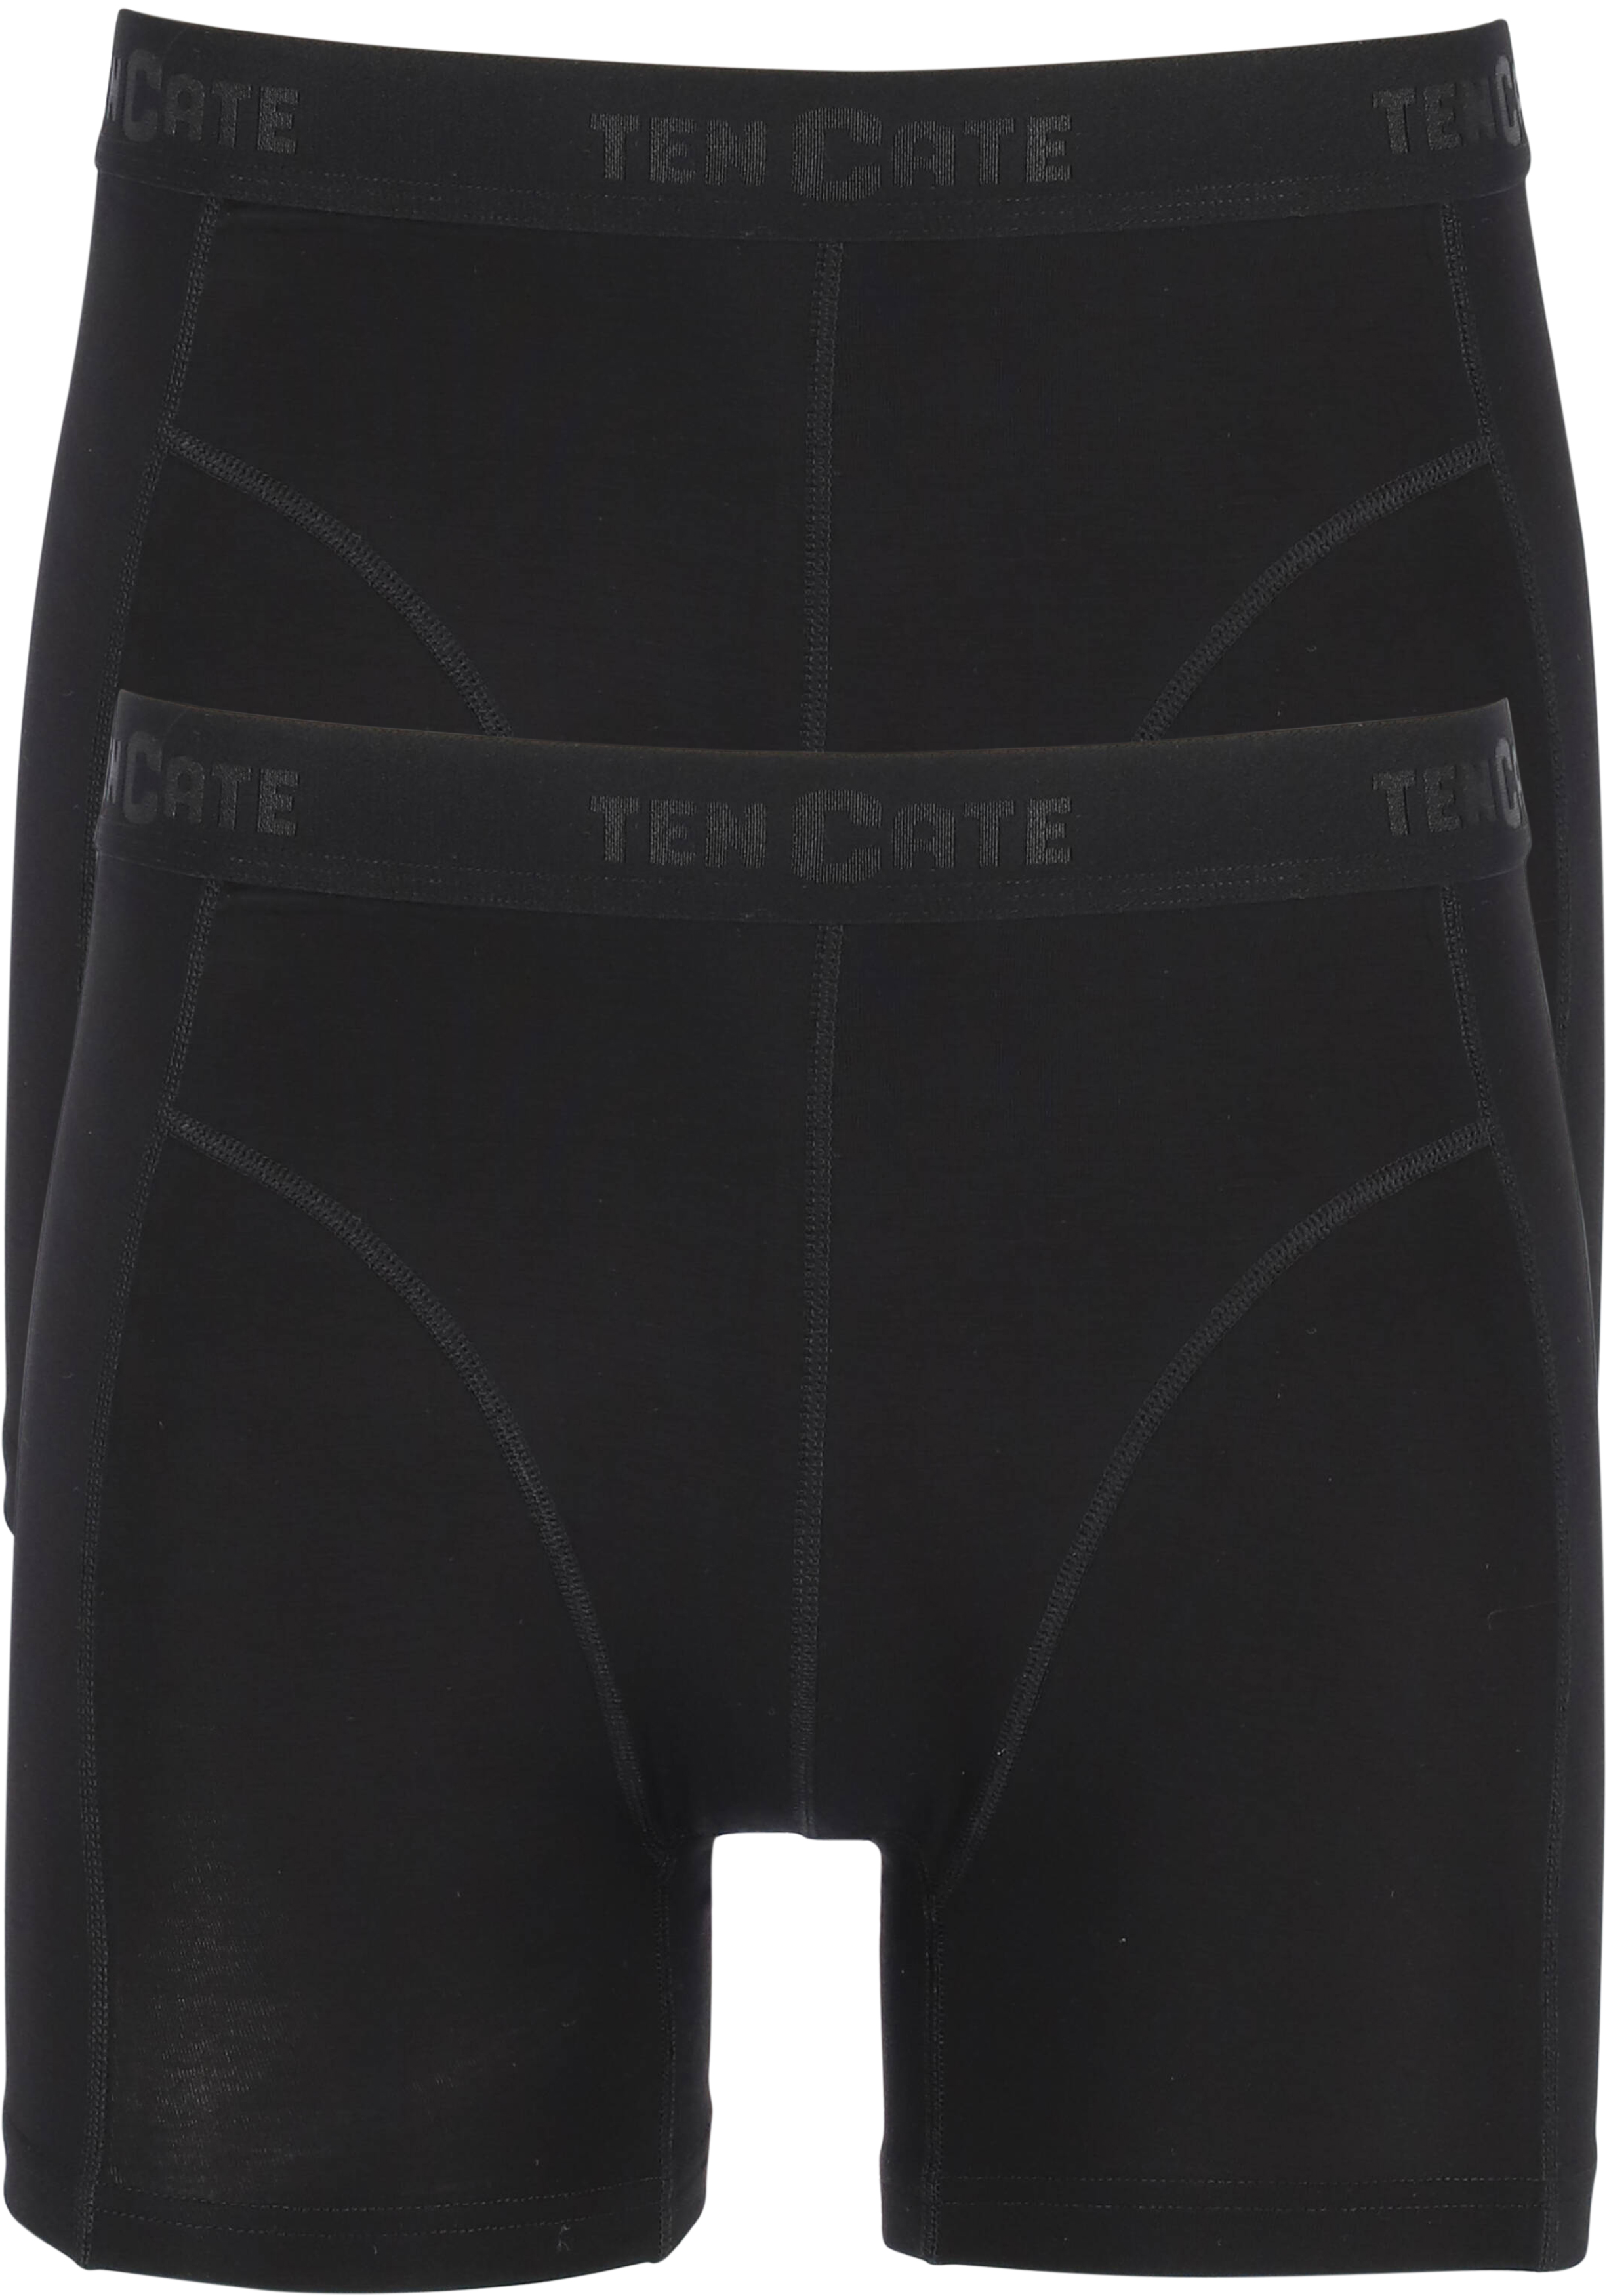 TEN CATE Basics men bamboo viscose shorts (2-pack), heren boxers normale lengte, zwart